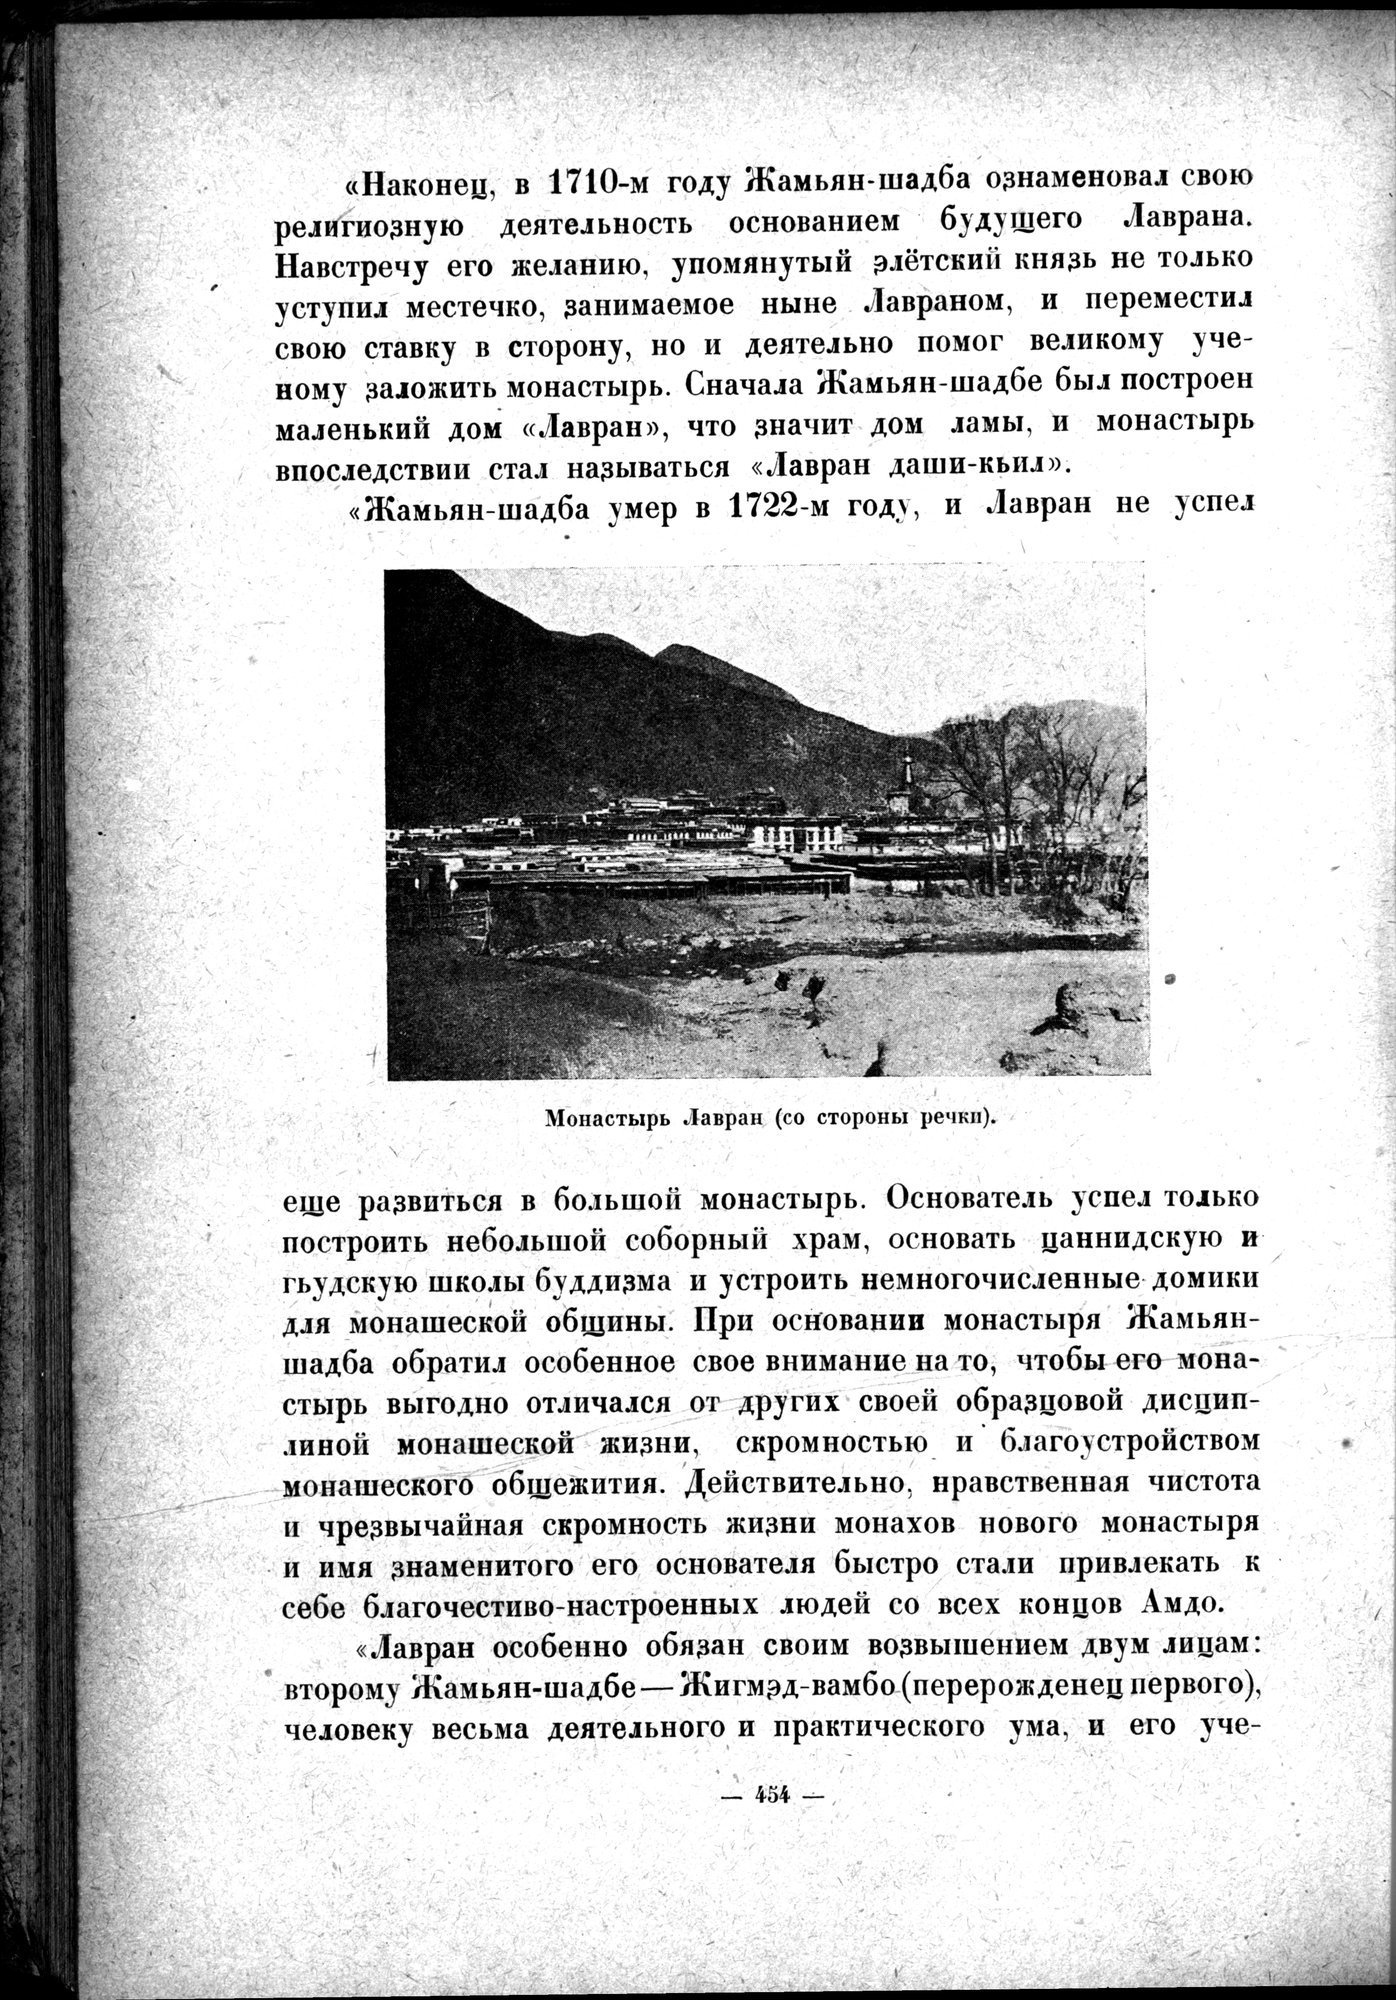 Mongoliya i Amdo i mertby gorod Khara-Khoto : vol.1 / Page 516 (Grayscale High Resolution Image)